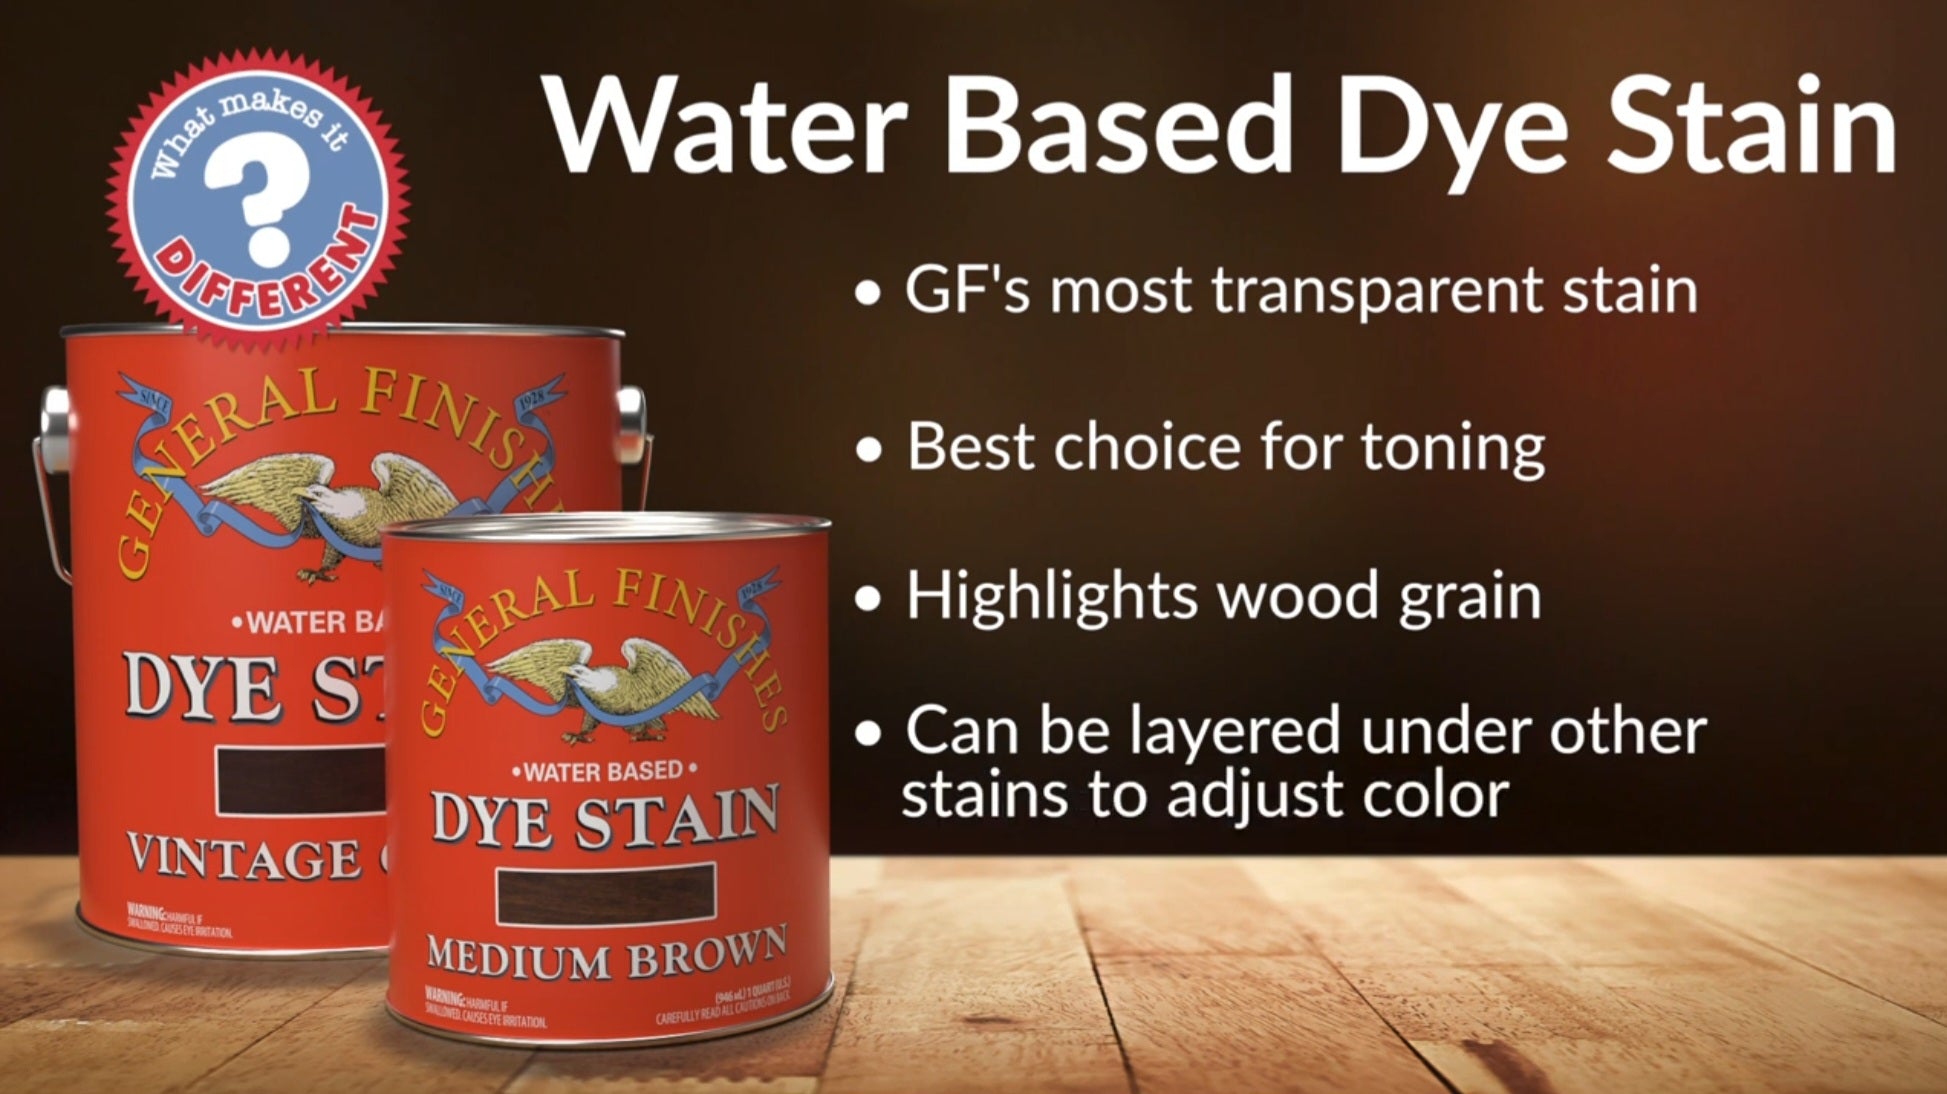 Characteristics of GF Dye Stain